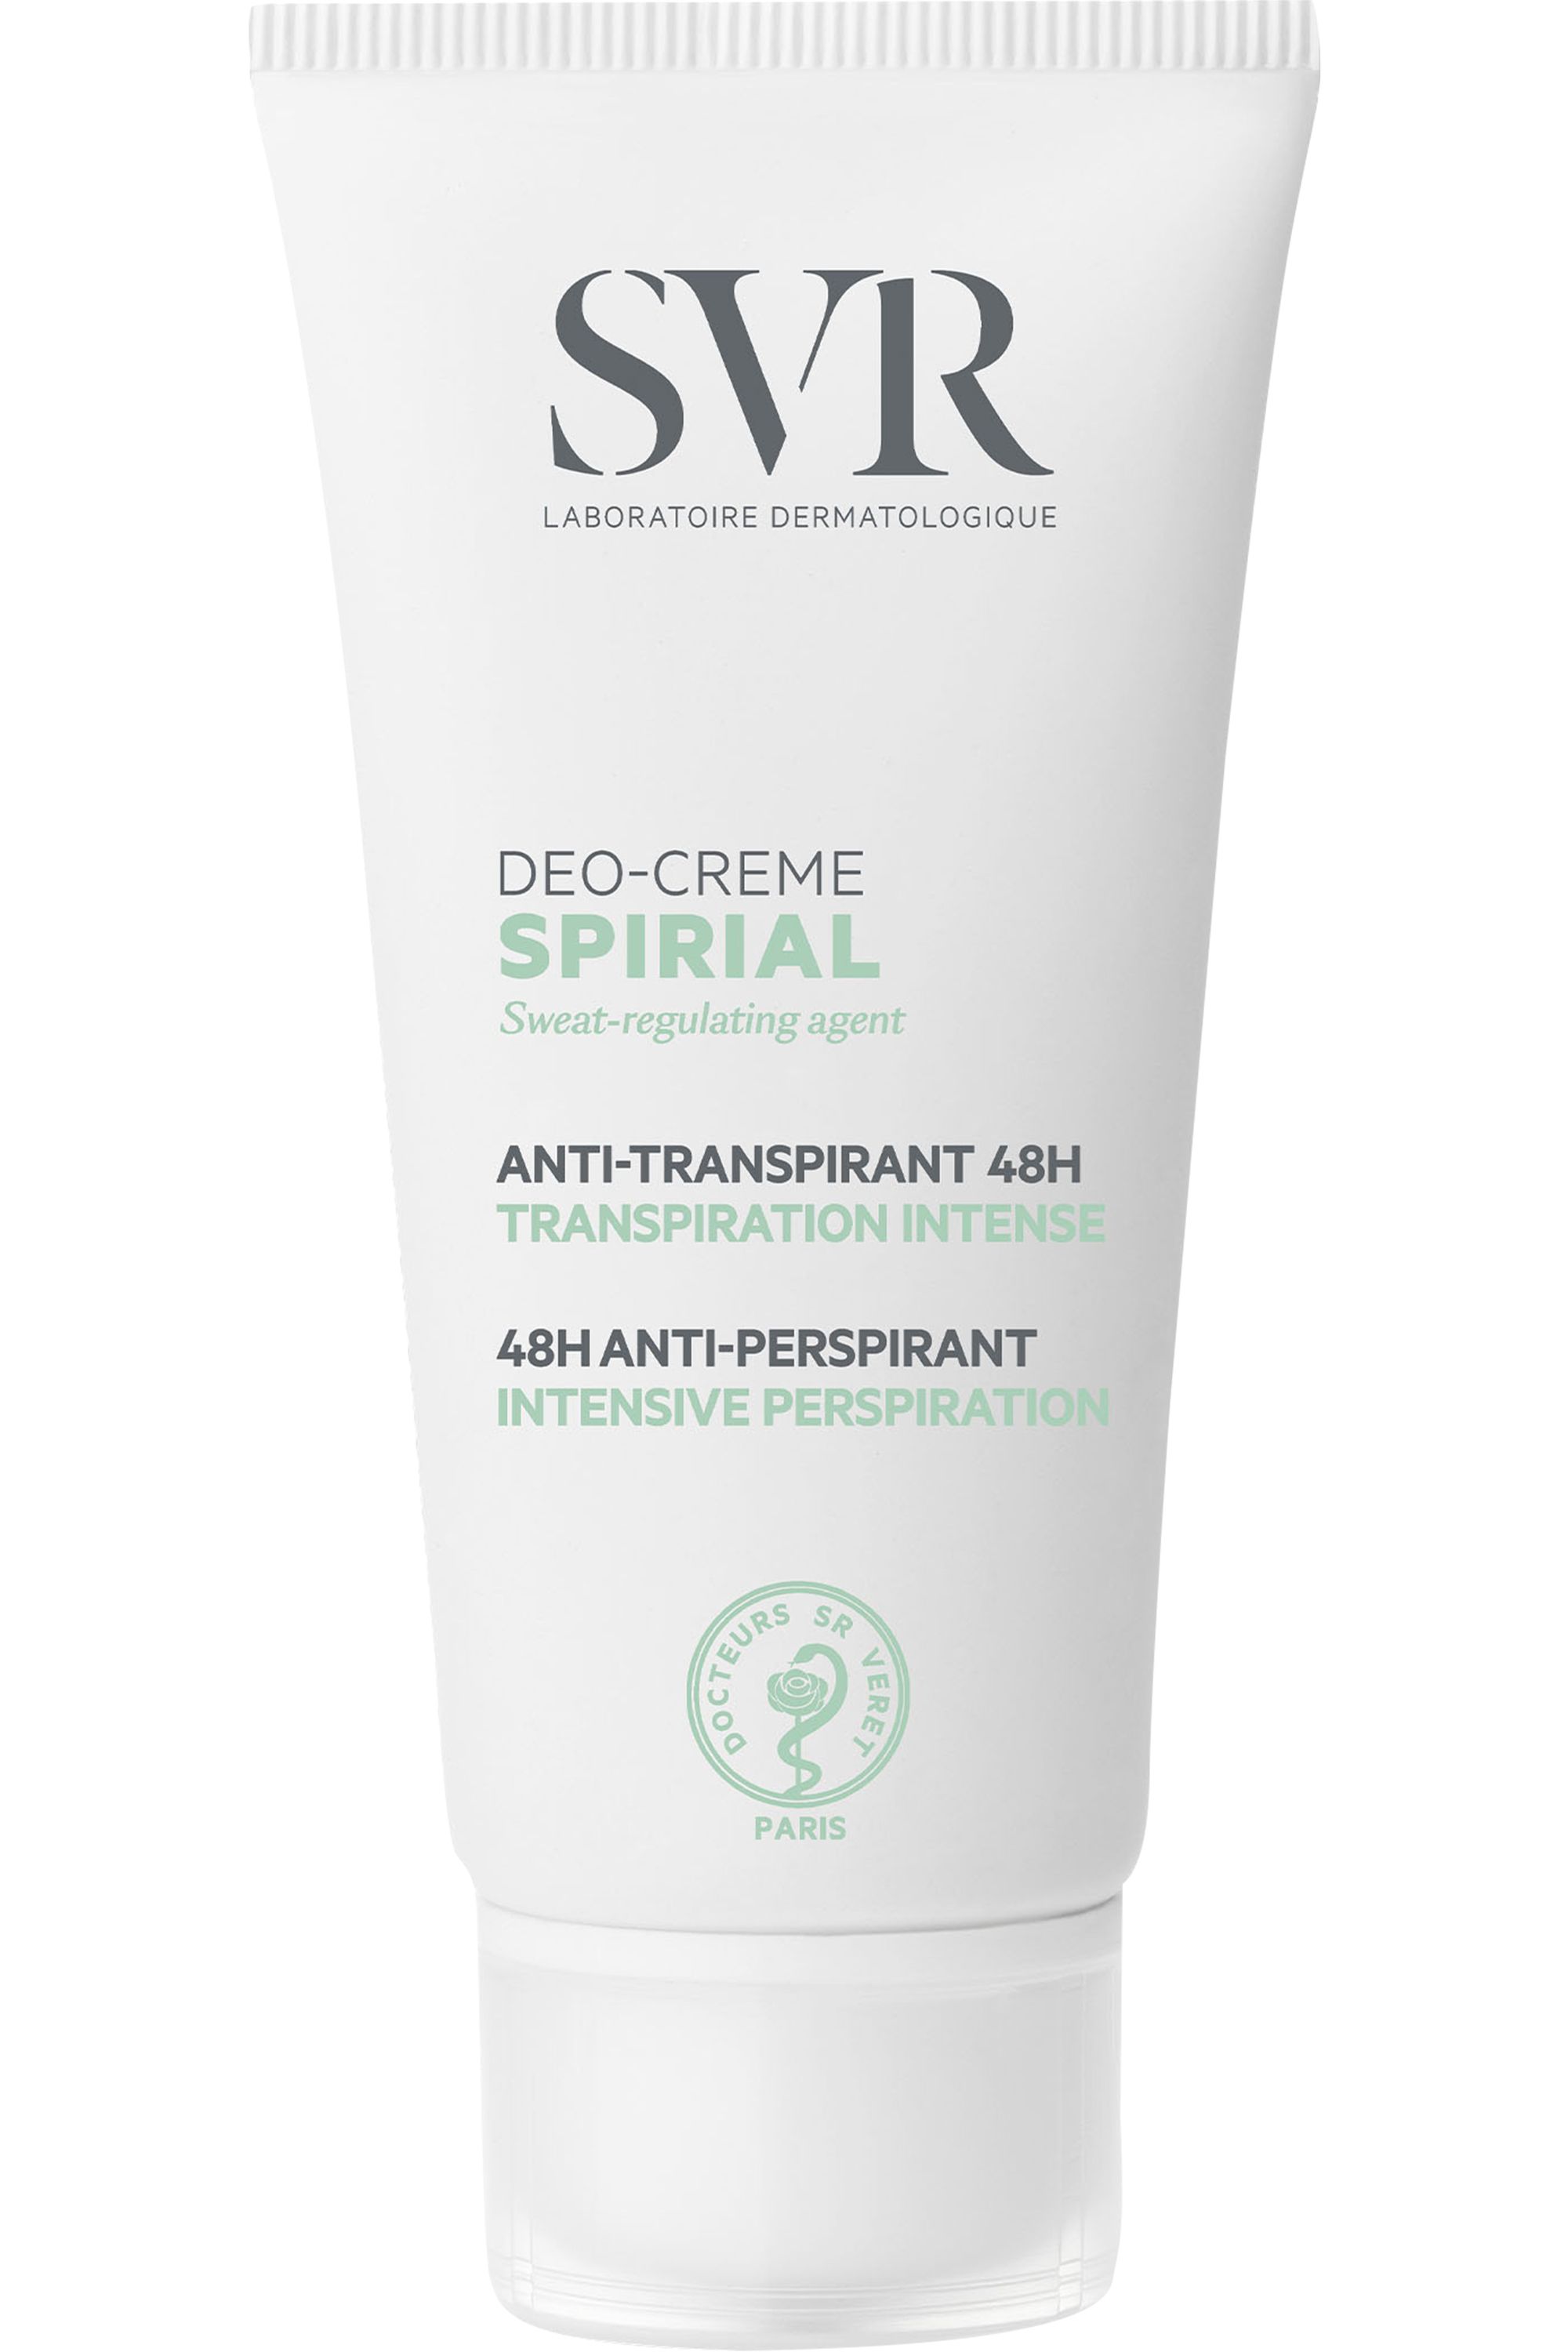 SVR - Déo-crème anti-transpirant 48h multi-zones Spirial - Blissim